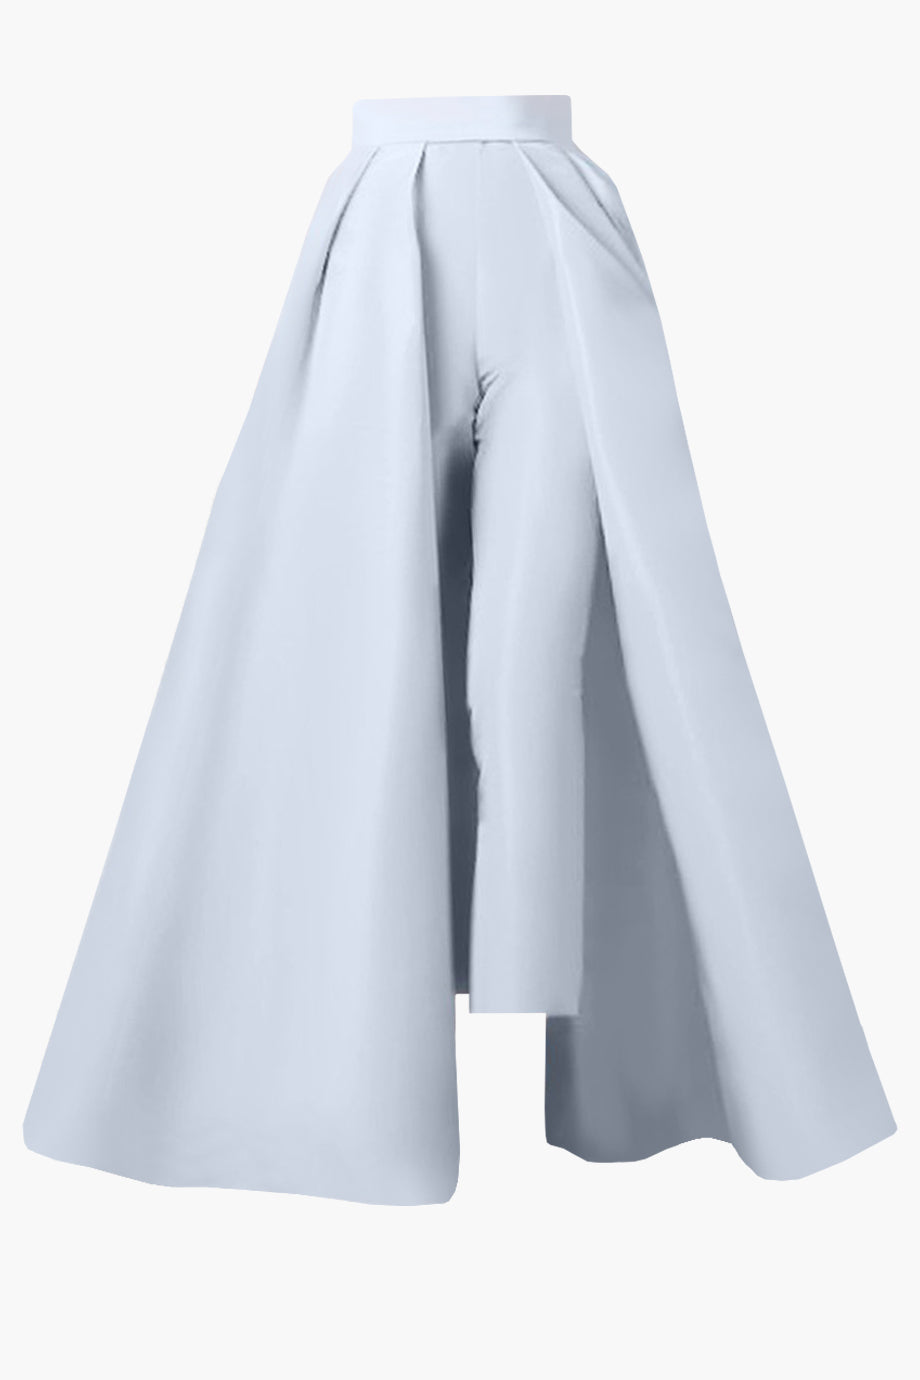 Women's Ruffle Pants Split High Waist Maxi Long Crepe Palazzo Overlay Pant  Skirt (green, Free Size) - Free Size, Ladies Palazzo Trousers, Ladies  Palazzo Pants, प्लाज़ो पैंट - Azamart, Gopalganj | ID: 2851750224297